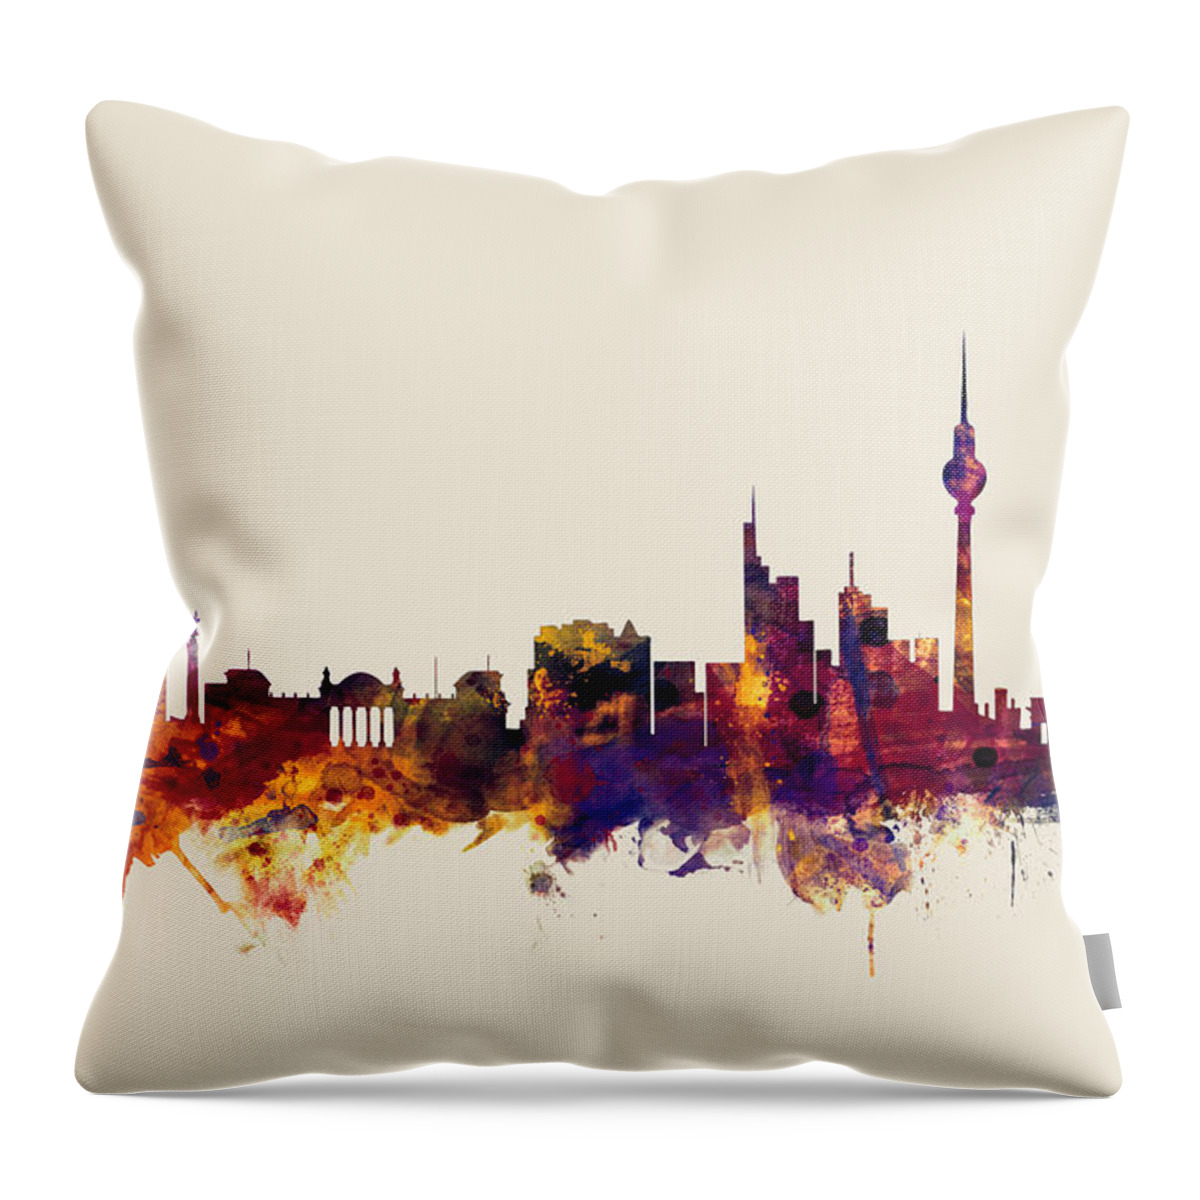 City Skyline Throw Pillow featuring the digital art Berlin Germany Skyline #3 by Michael Tompsett